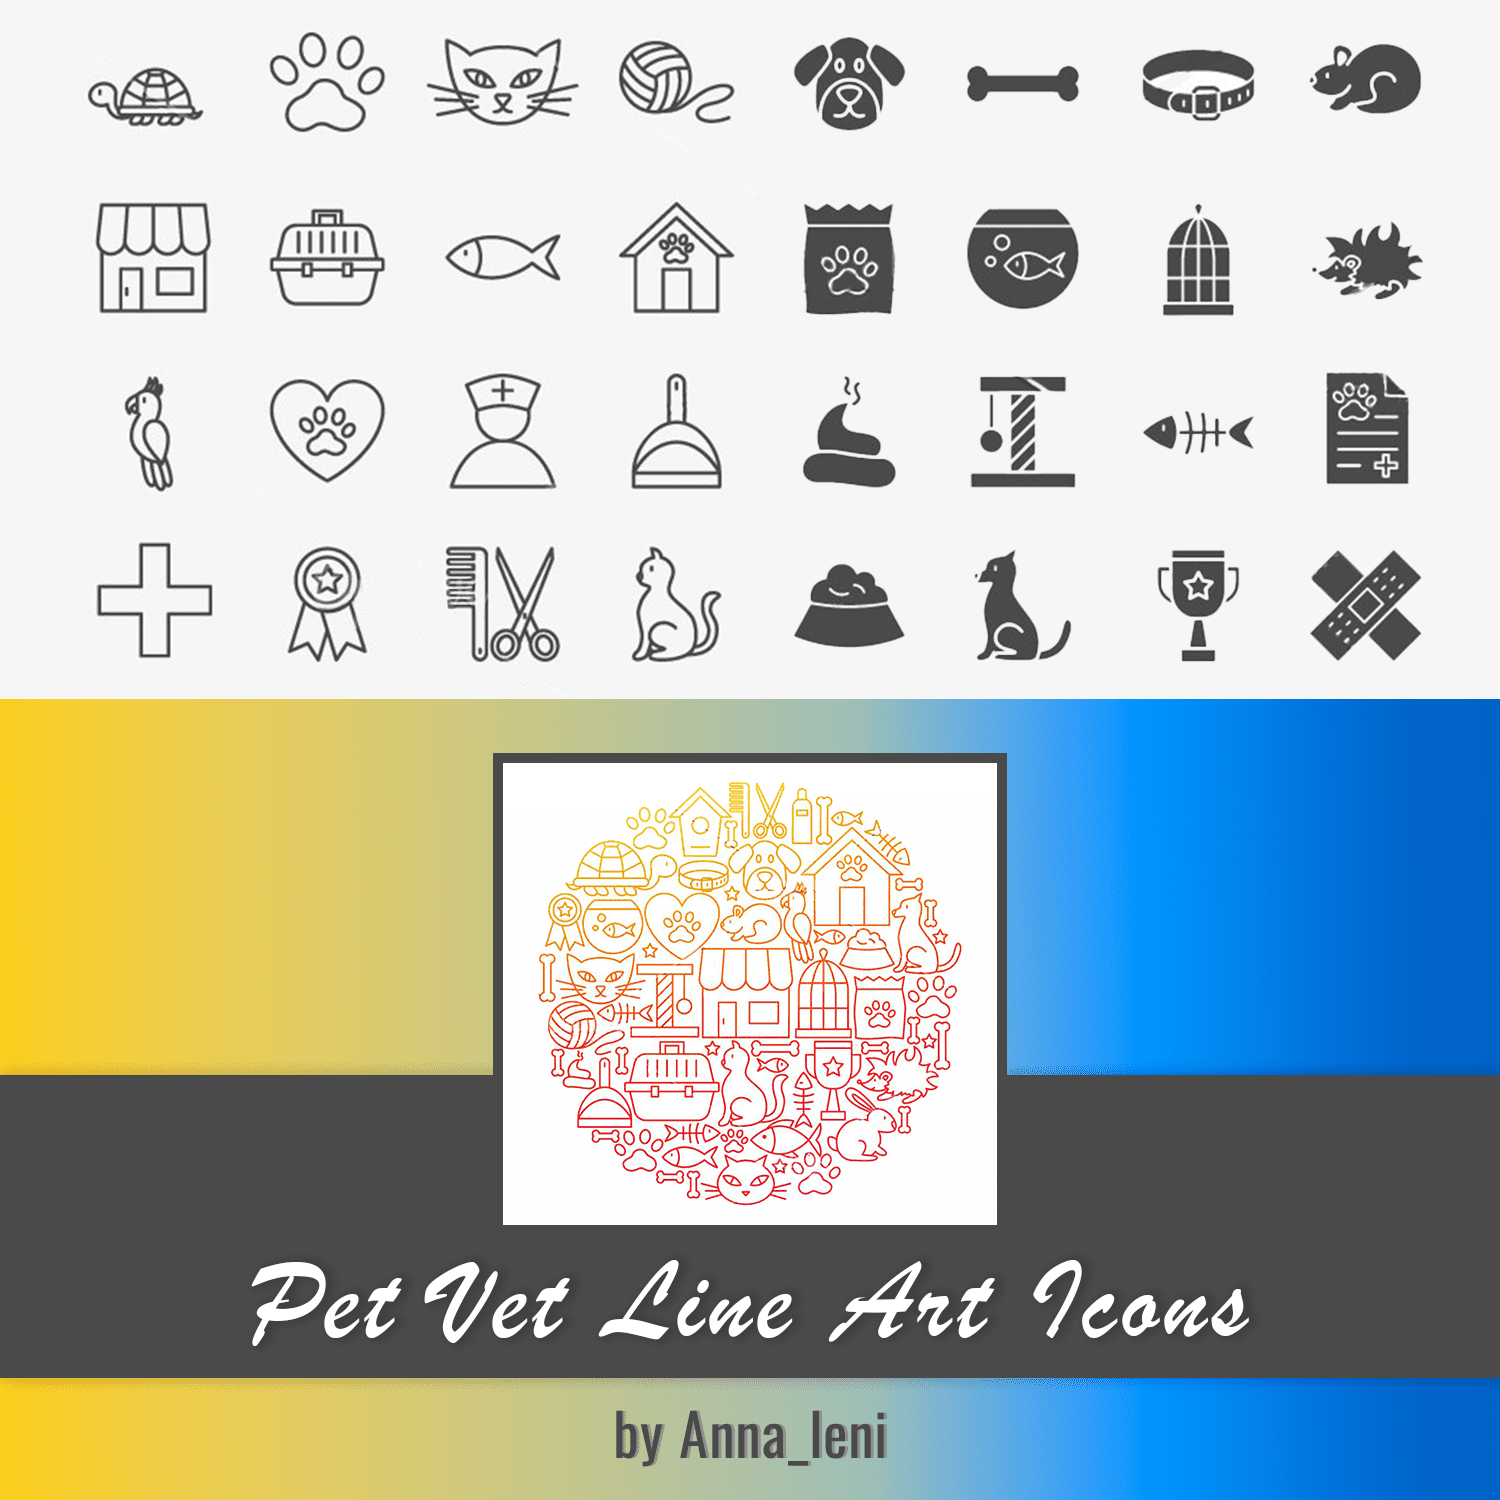 Pet Vet Line Art Icons cover.